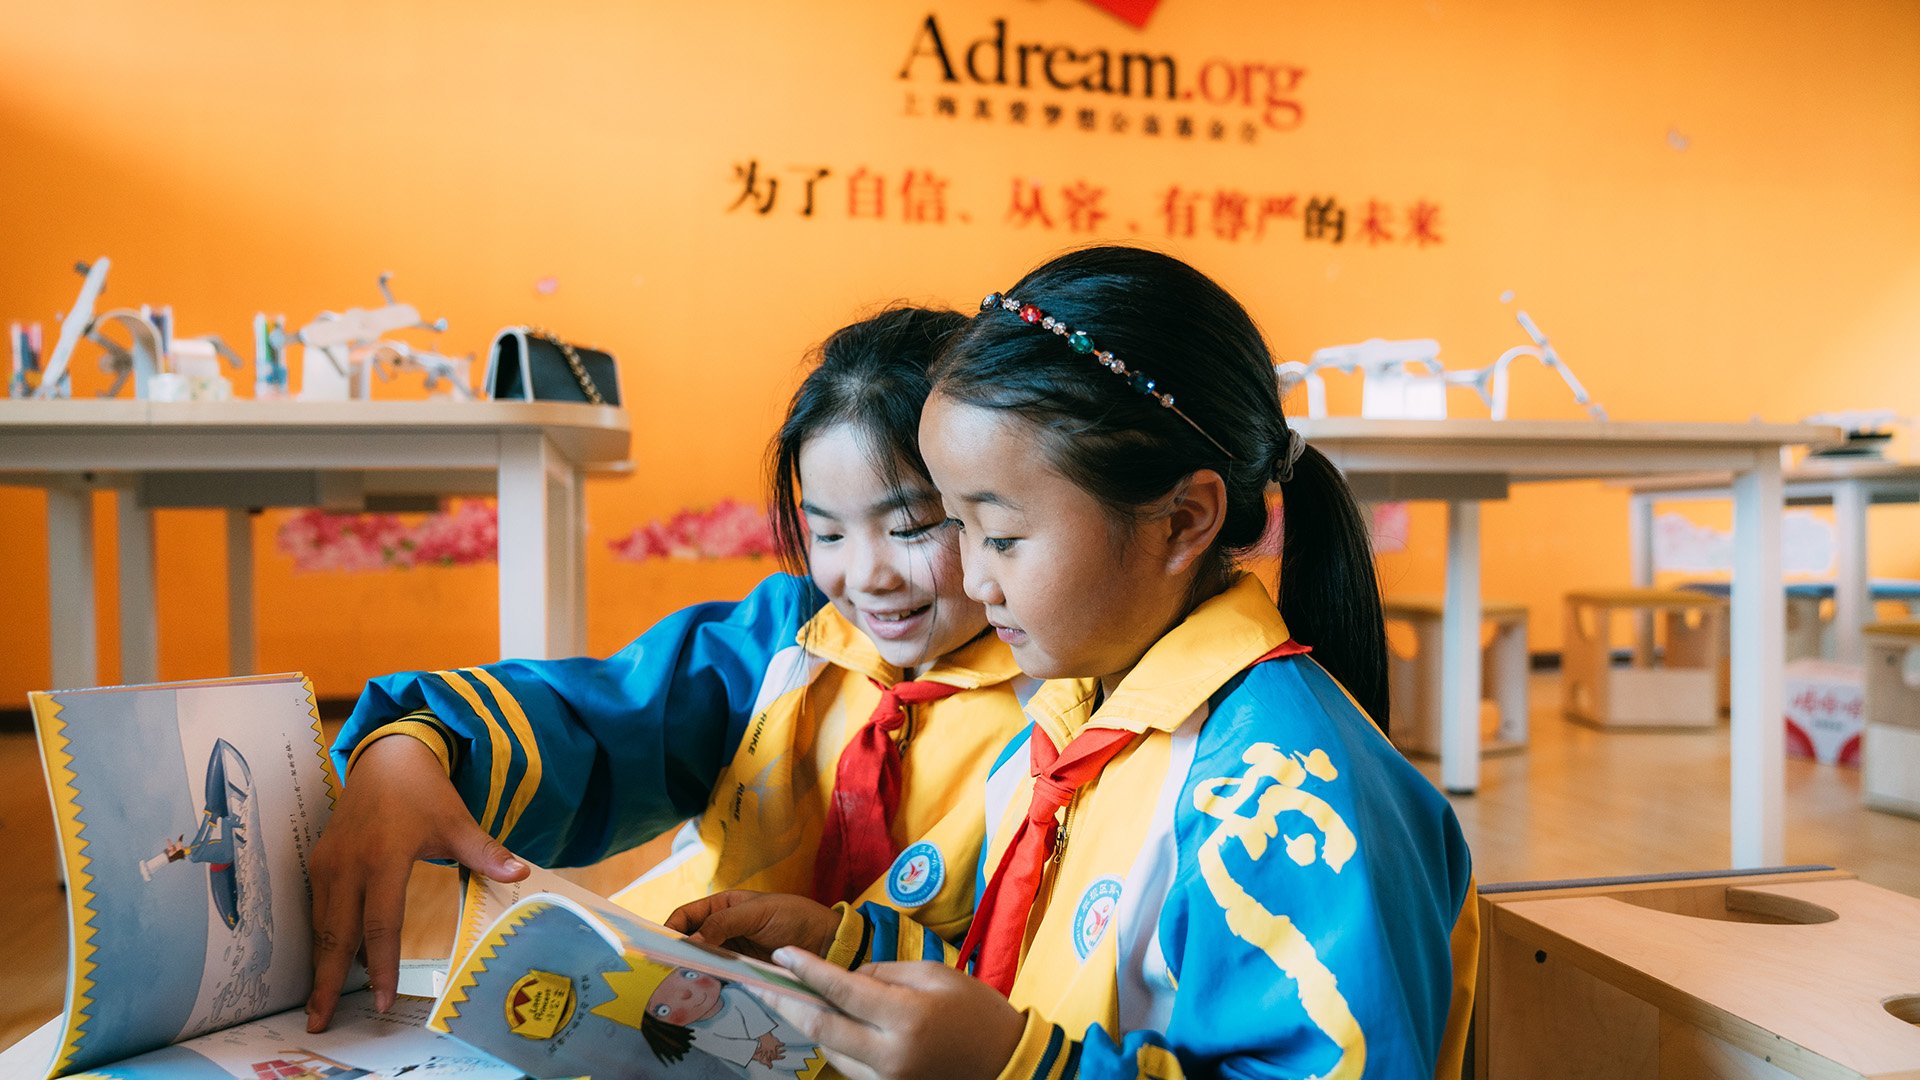 Two children in Adream Center 